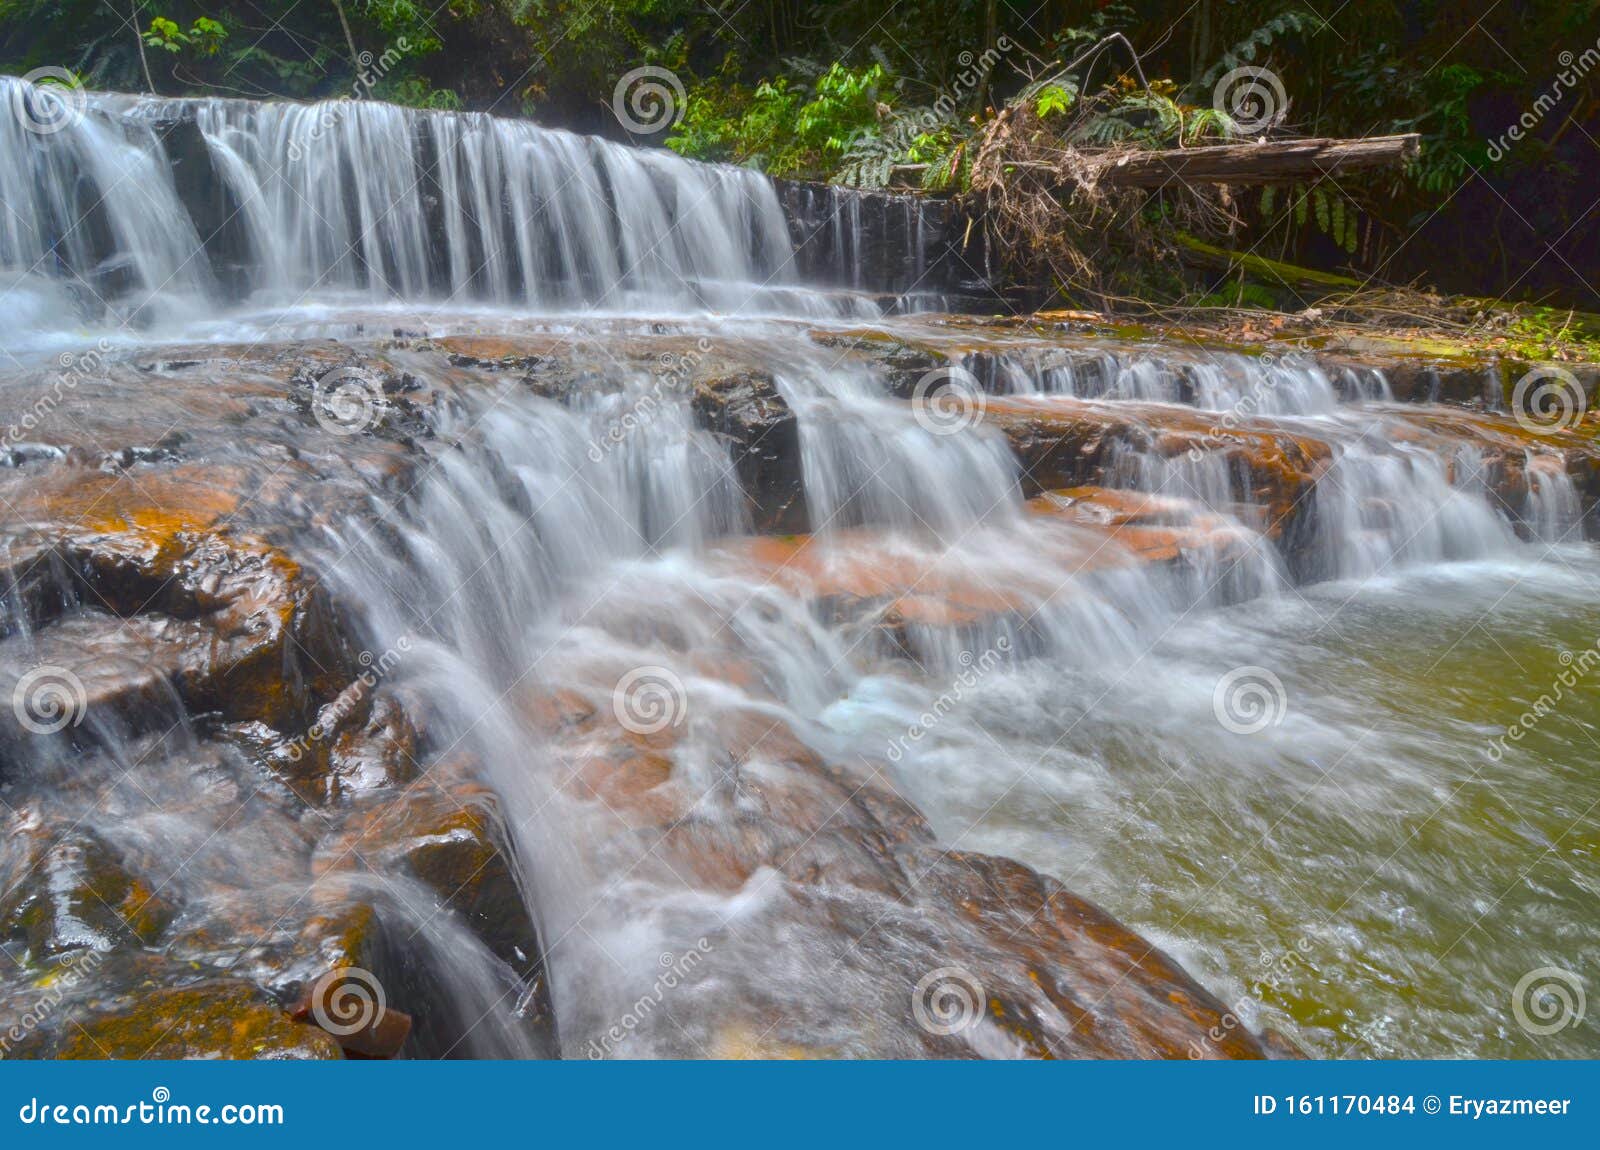 a beautiful scenery of atas pelangi waterfall in pahang, malaysia